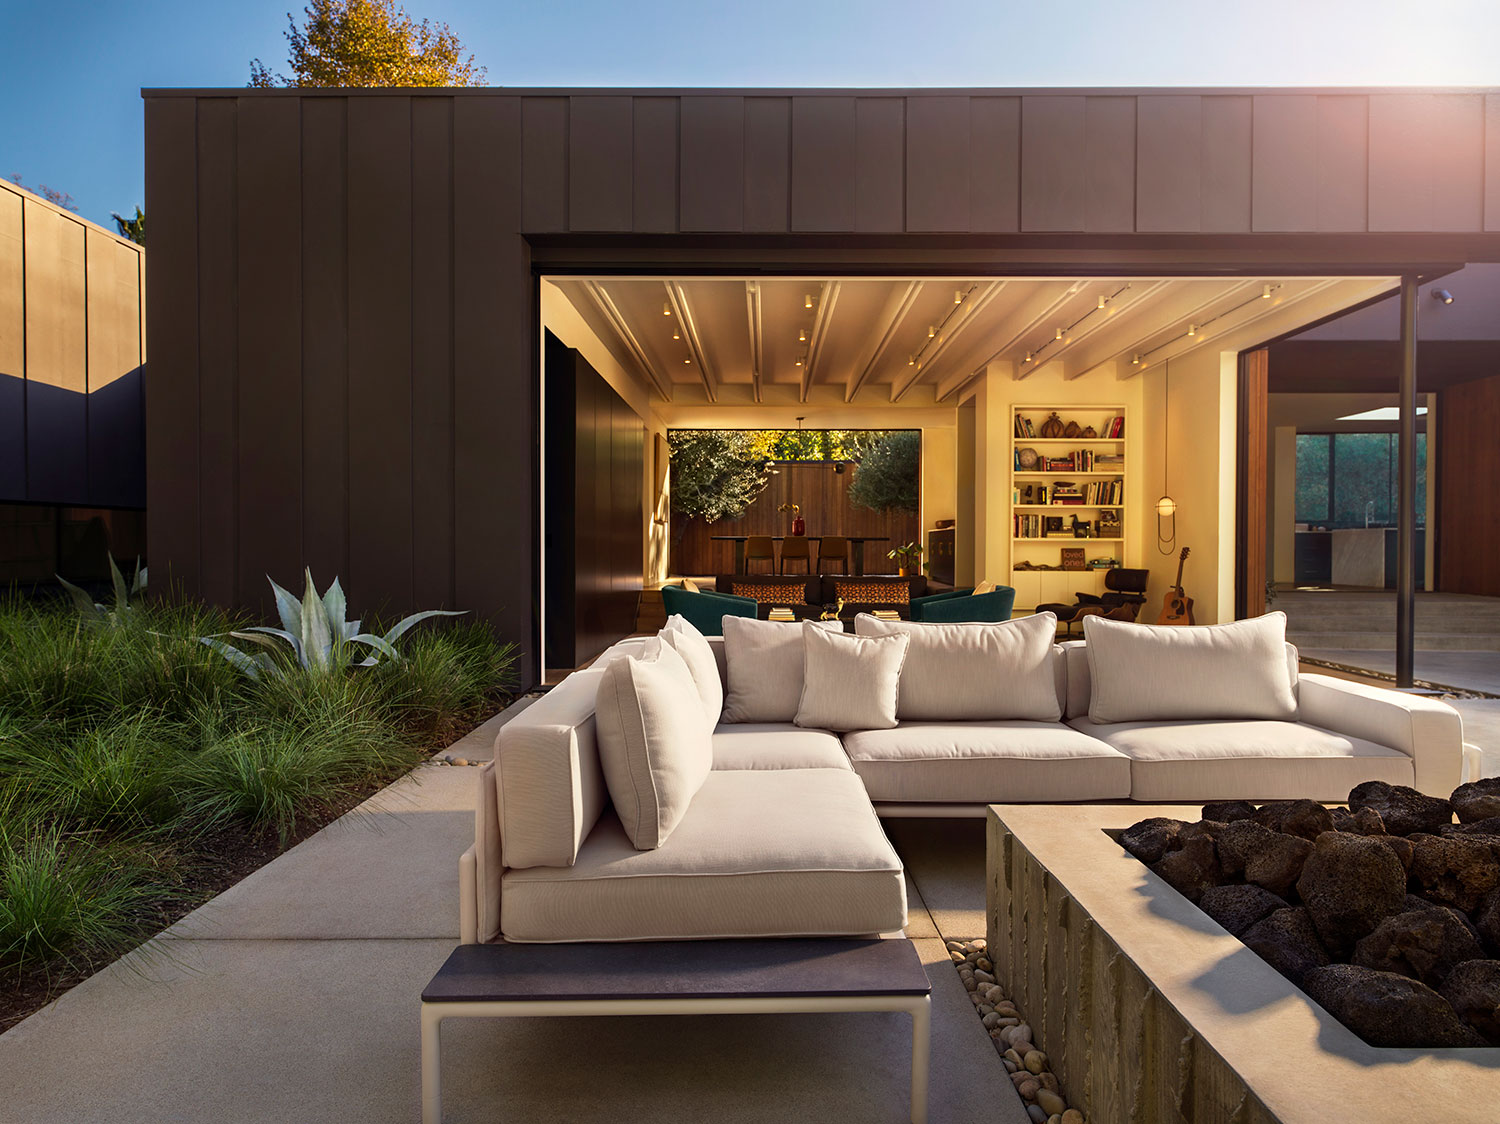 brown jordan outdoor furniture on rustic contemporary deck